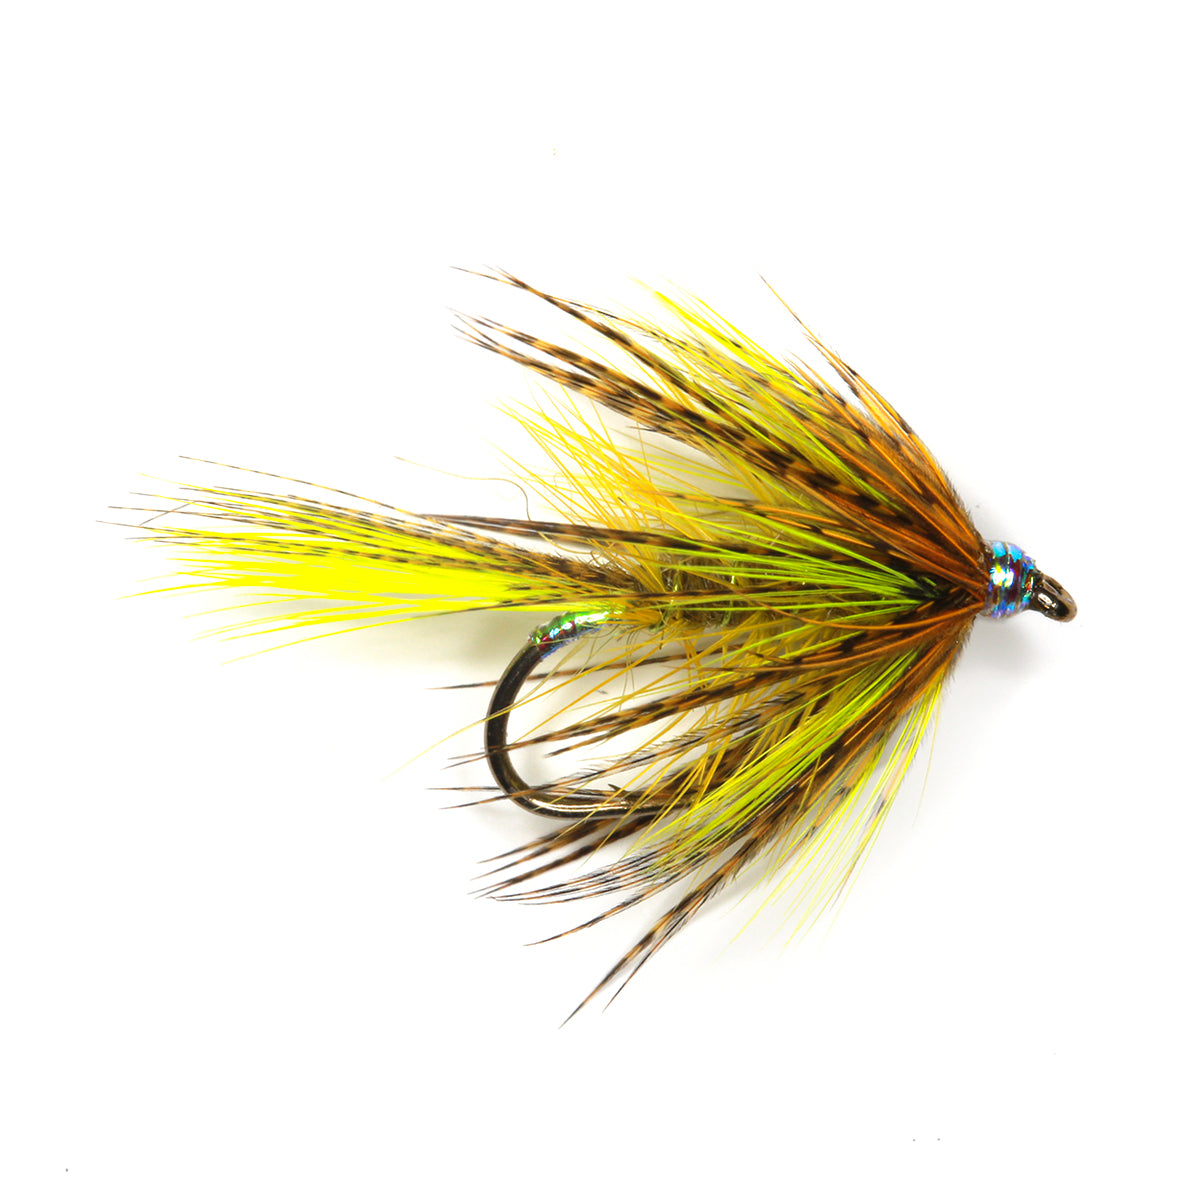 The McGregor – Clonanav Fly Fishing